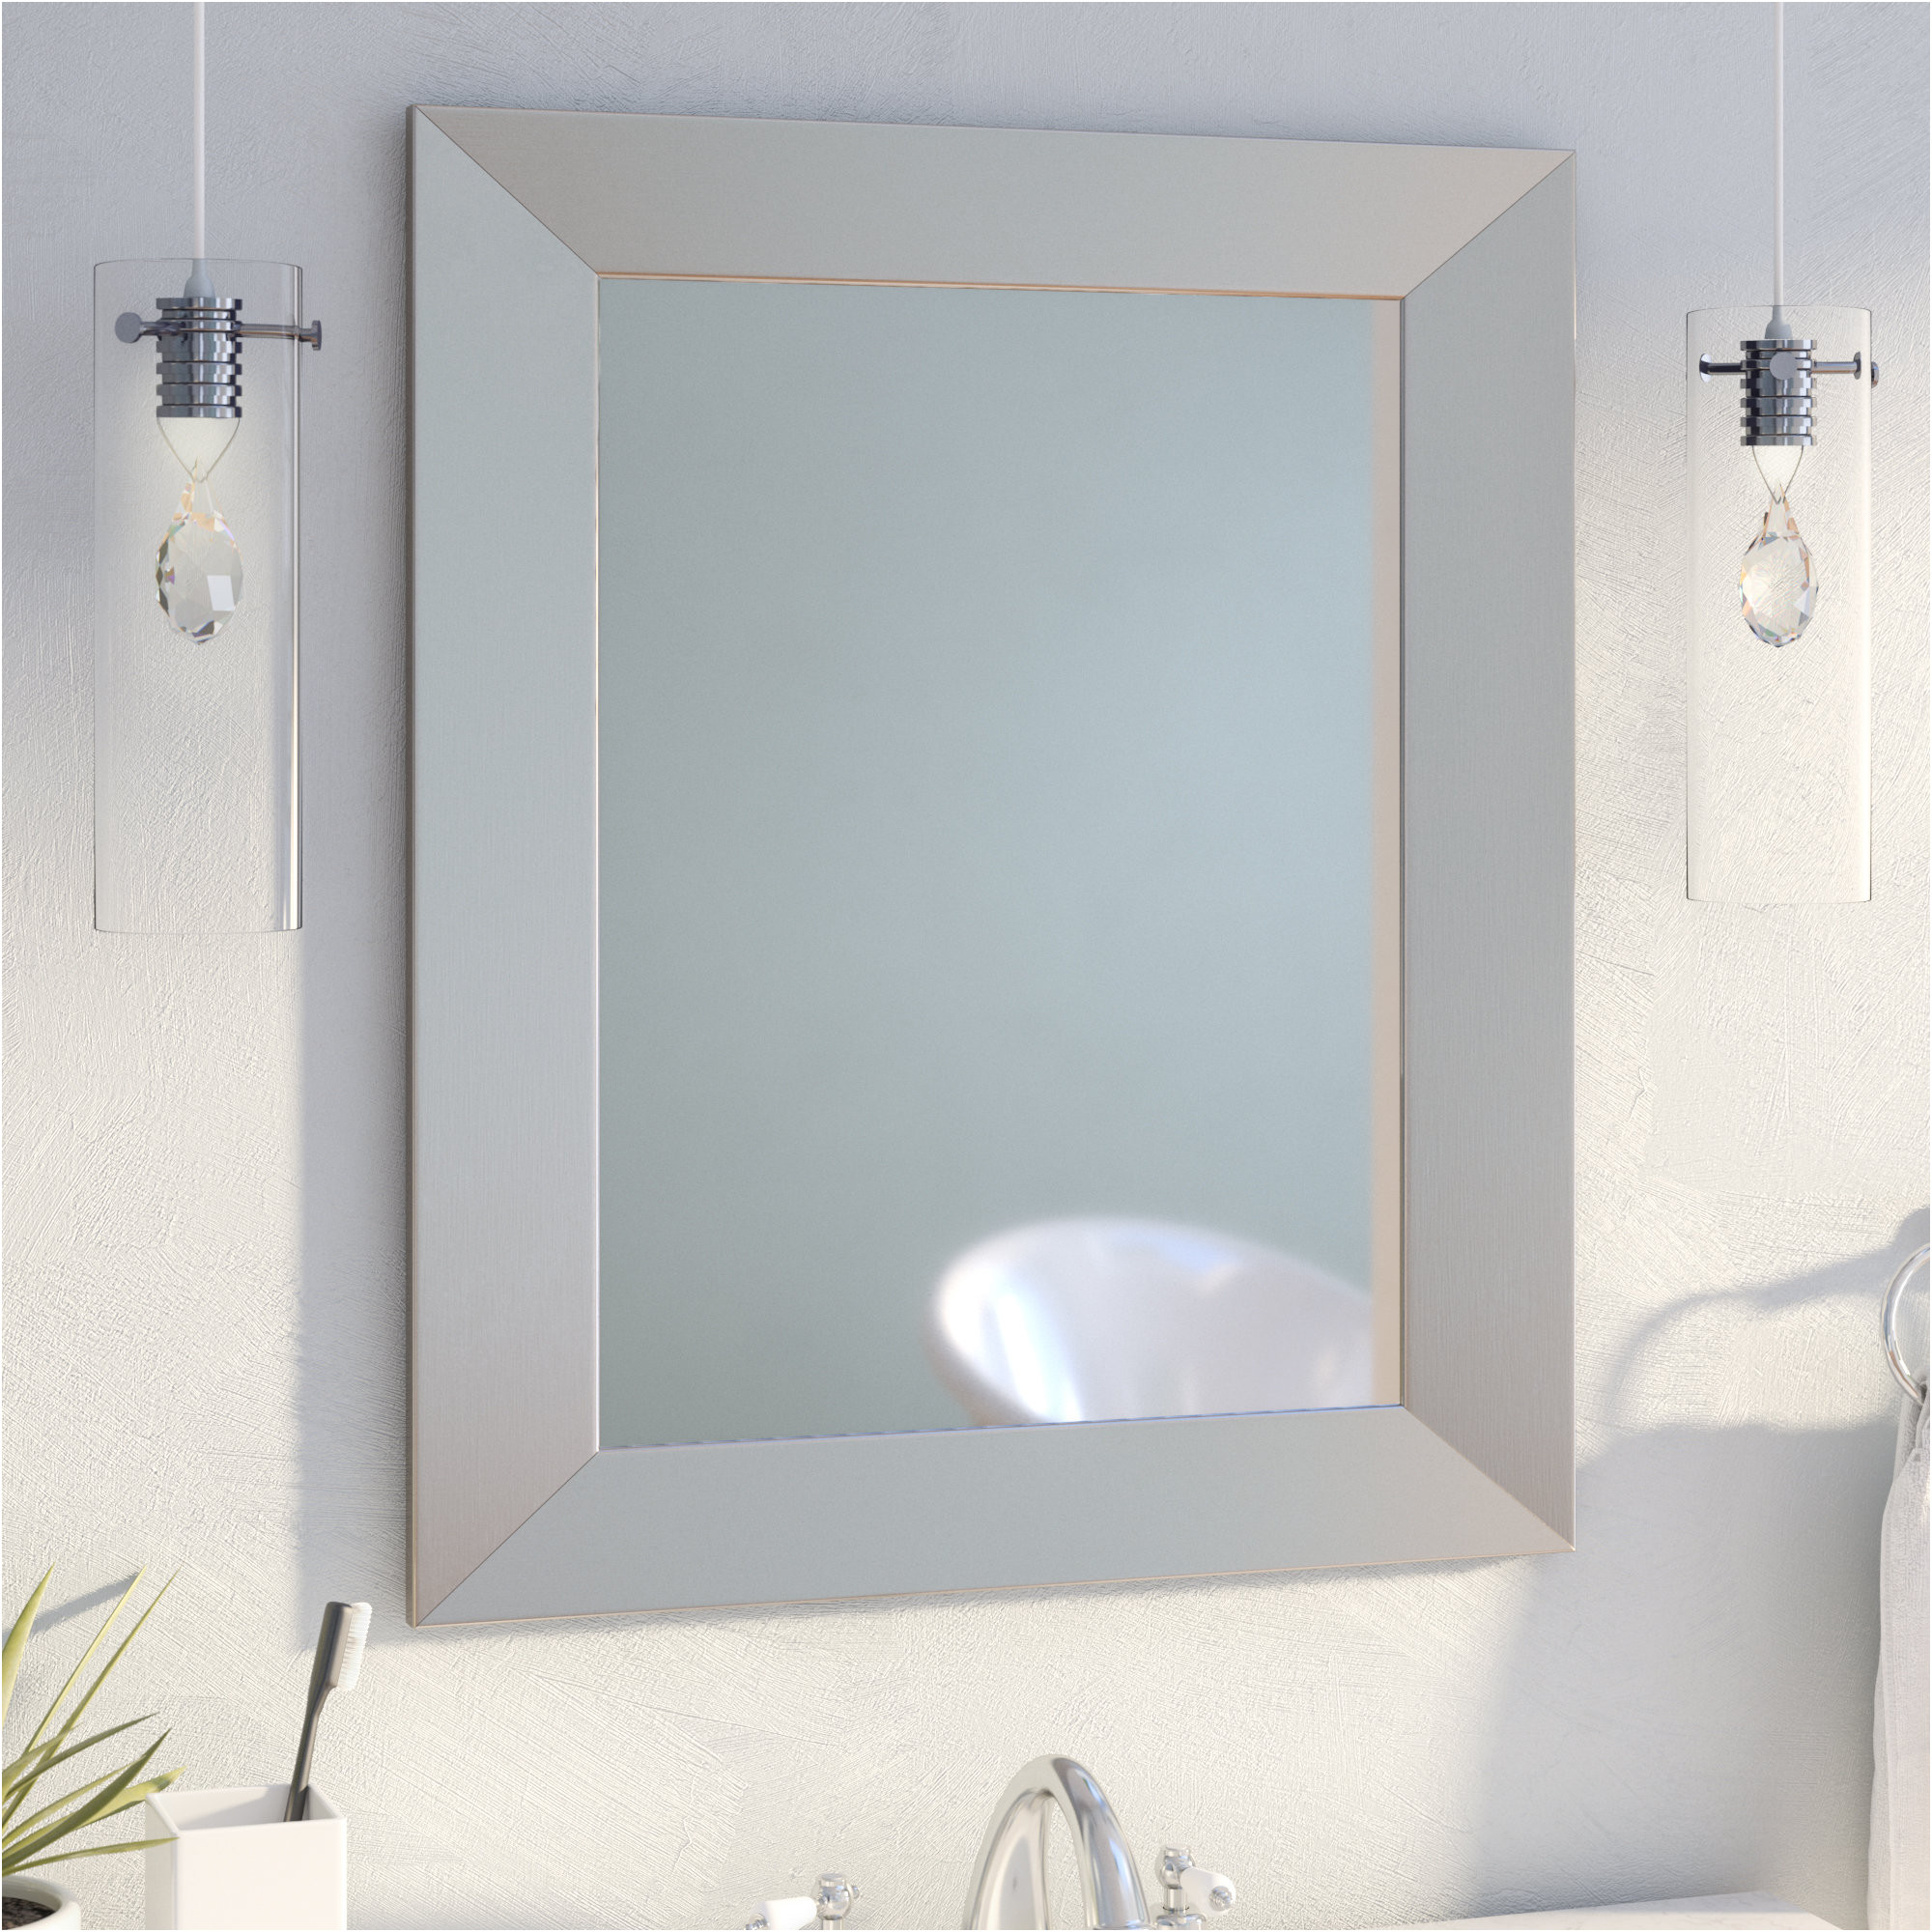 Beautiful Rectangular Bathroom Wall Mirror with Beveled Edge